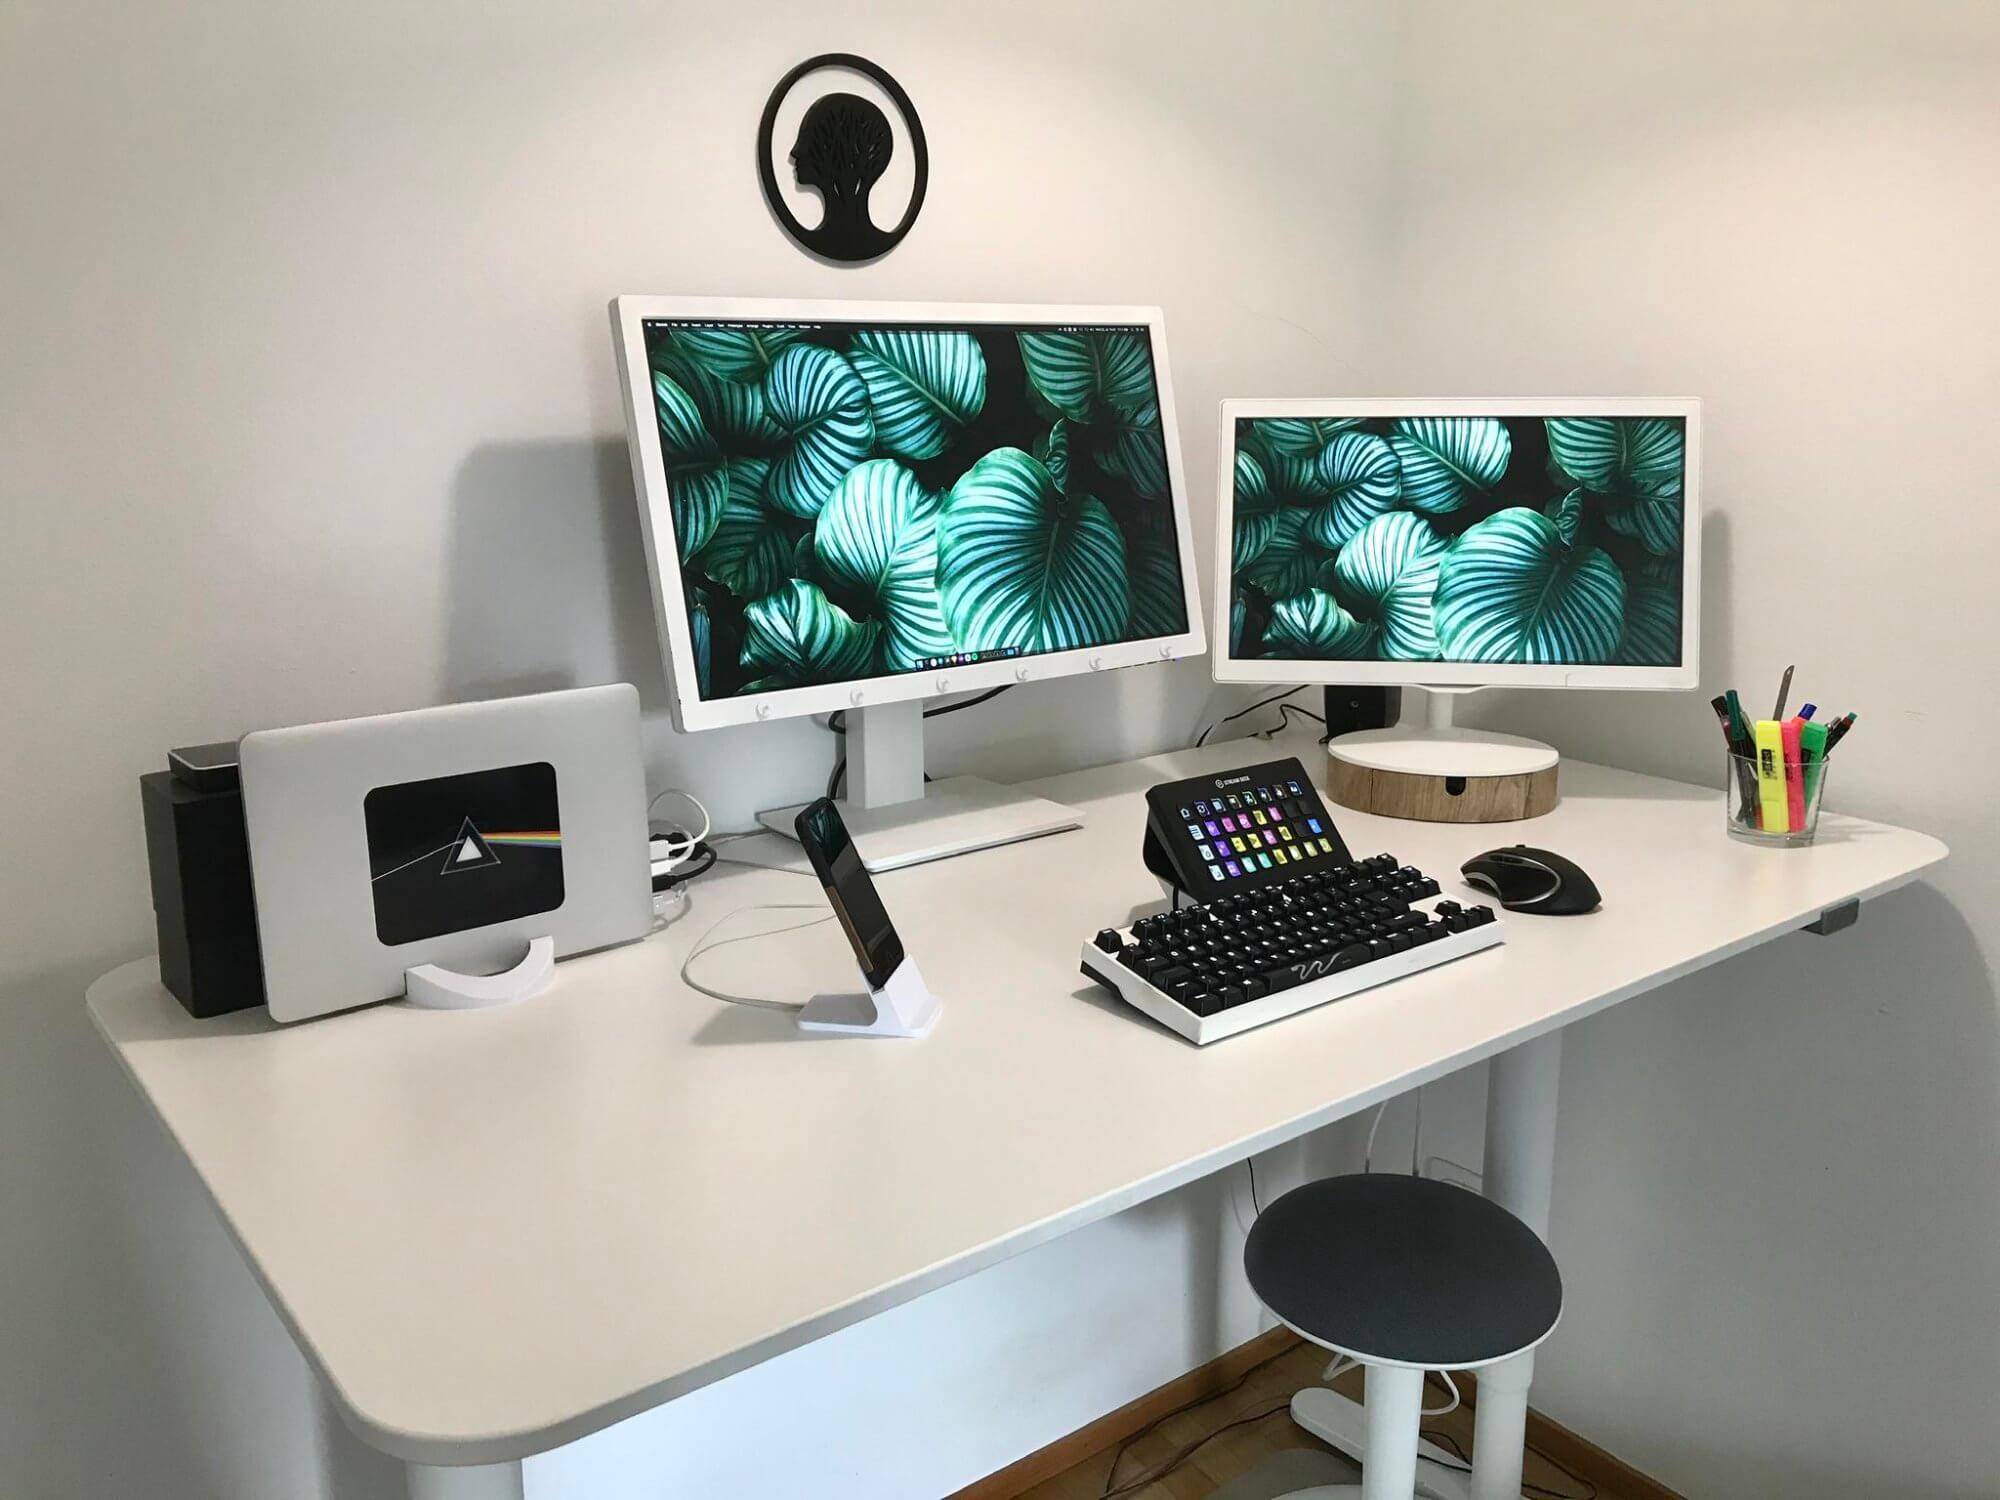 An IKEA BEKANT standing desk in a dual monitor desk setup